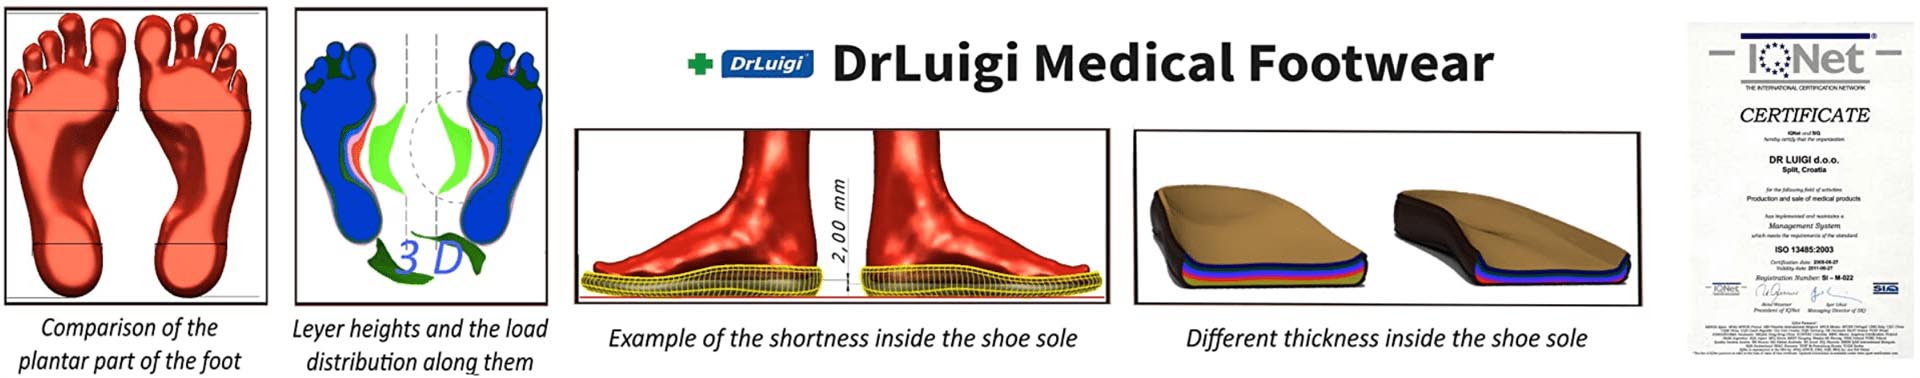 DrLuigi Medical Footware